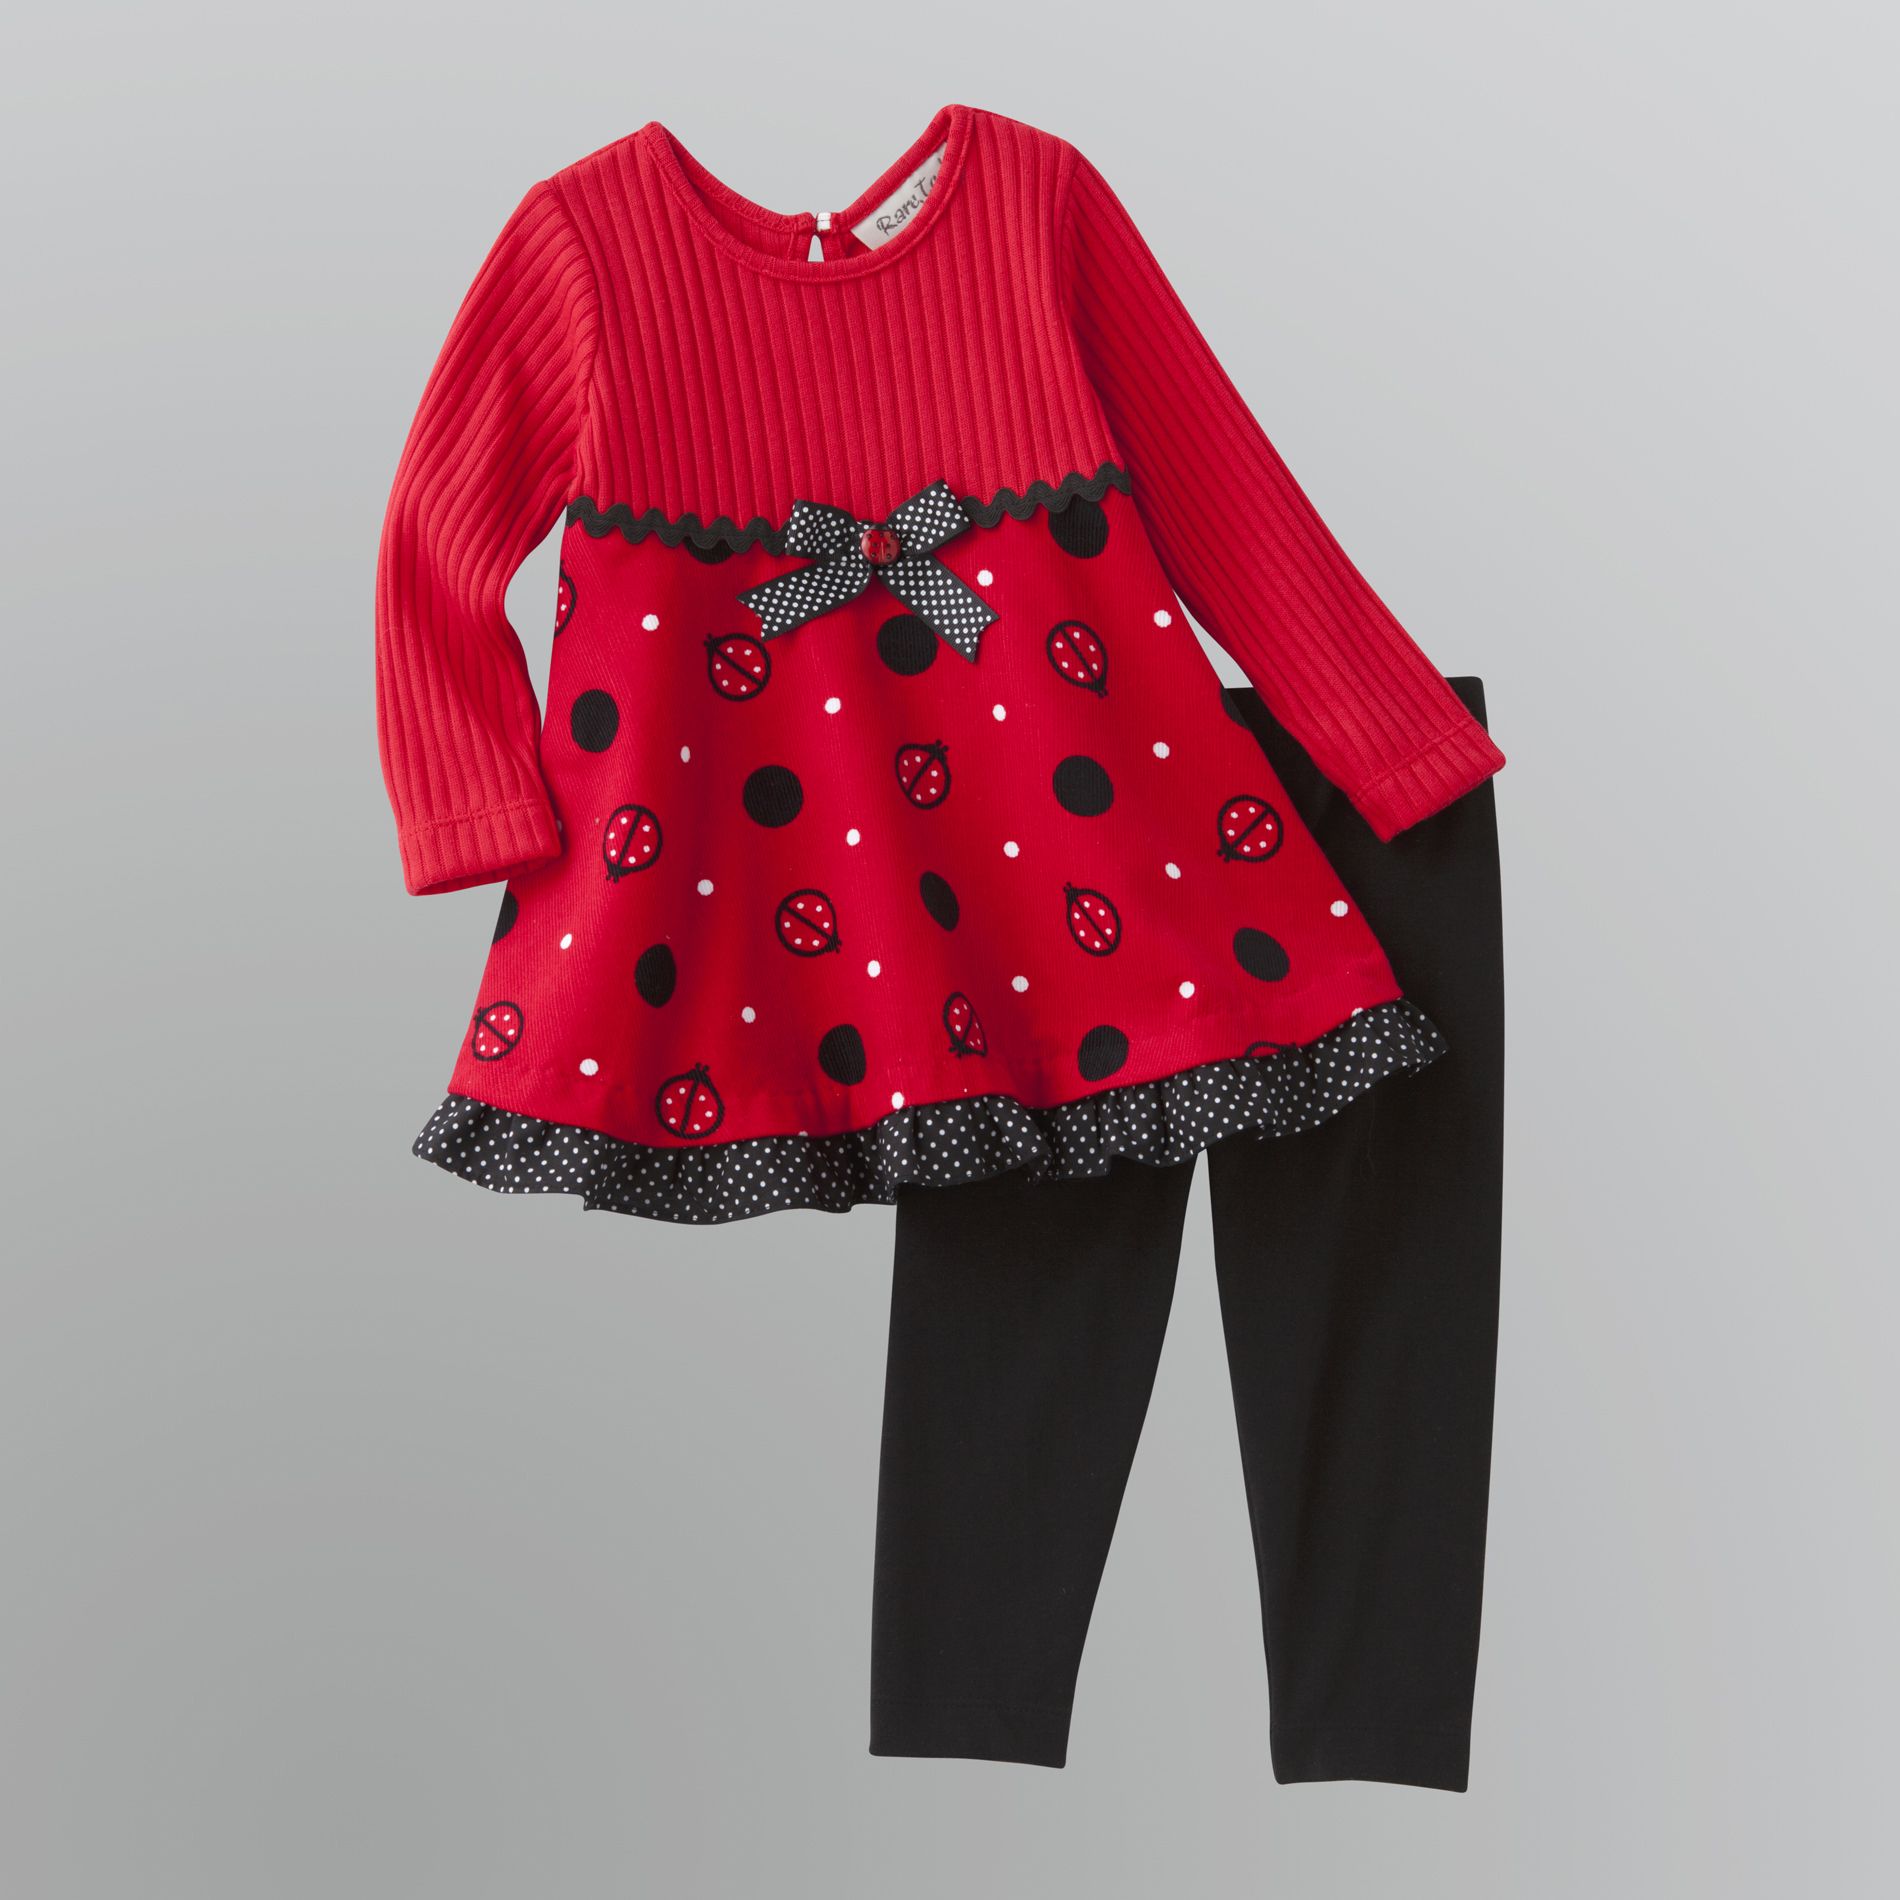 Rare Too Infant & Toddler Girl's Knit Woven Top & Legging Set - Red